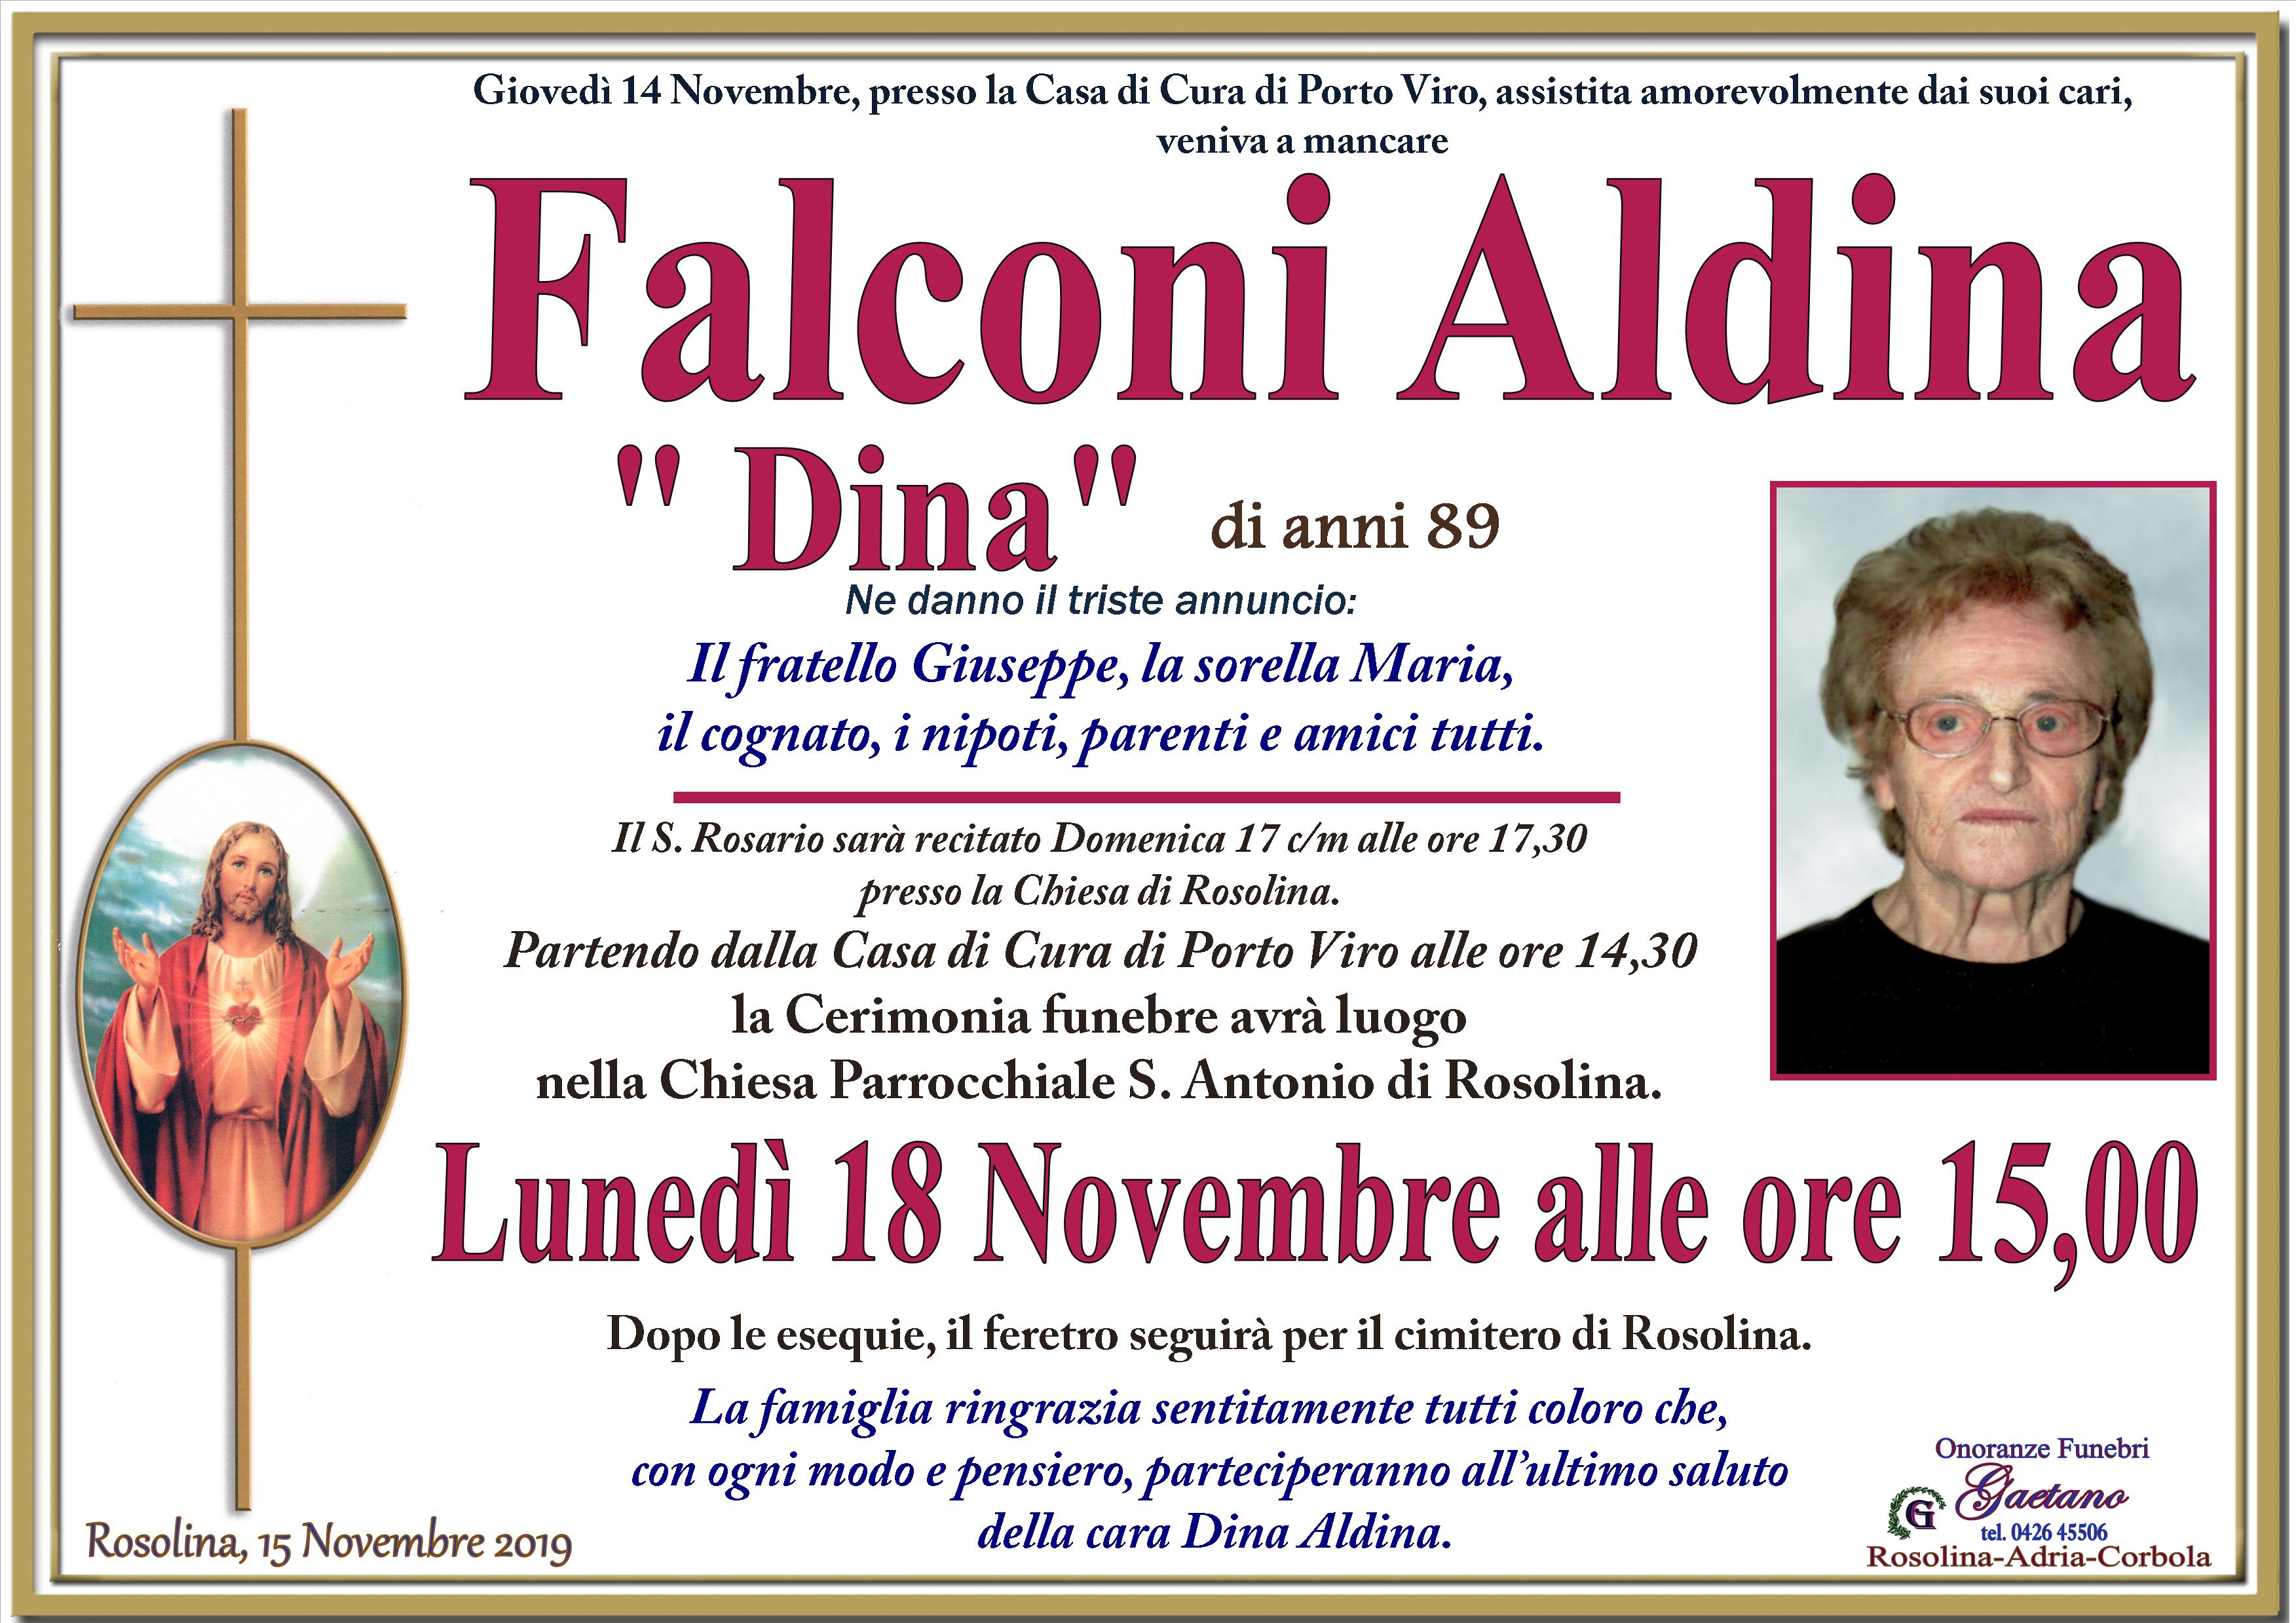 Falconi Aldina ” Dina “